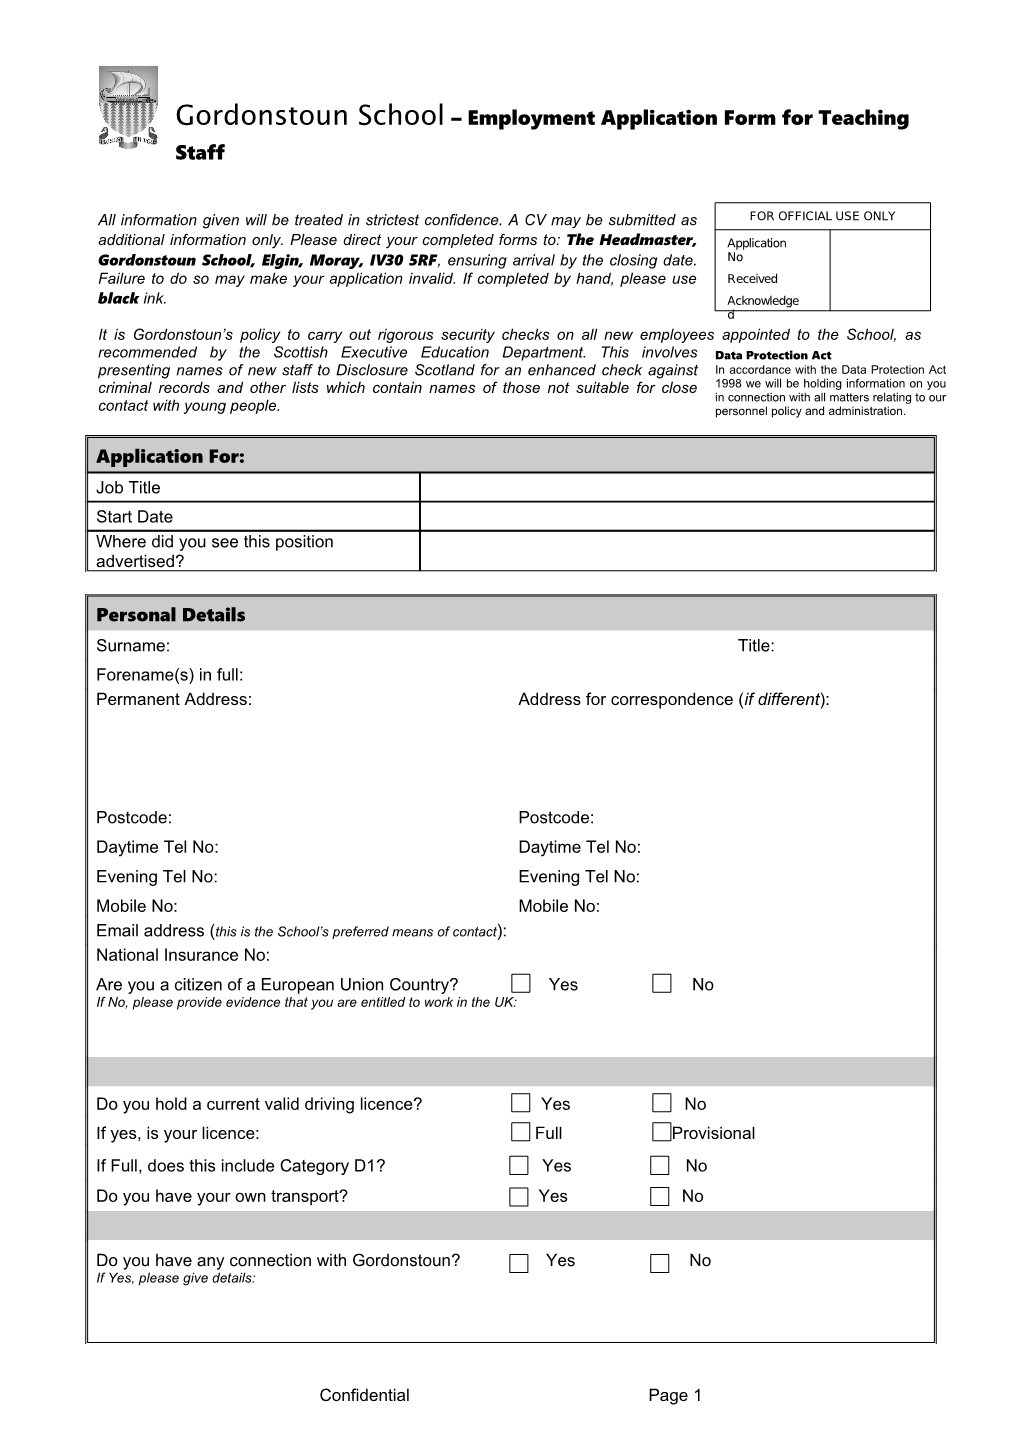 Gordonstounschool Employment Application Form for Teaching Staff